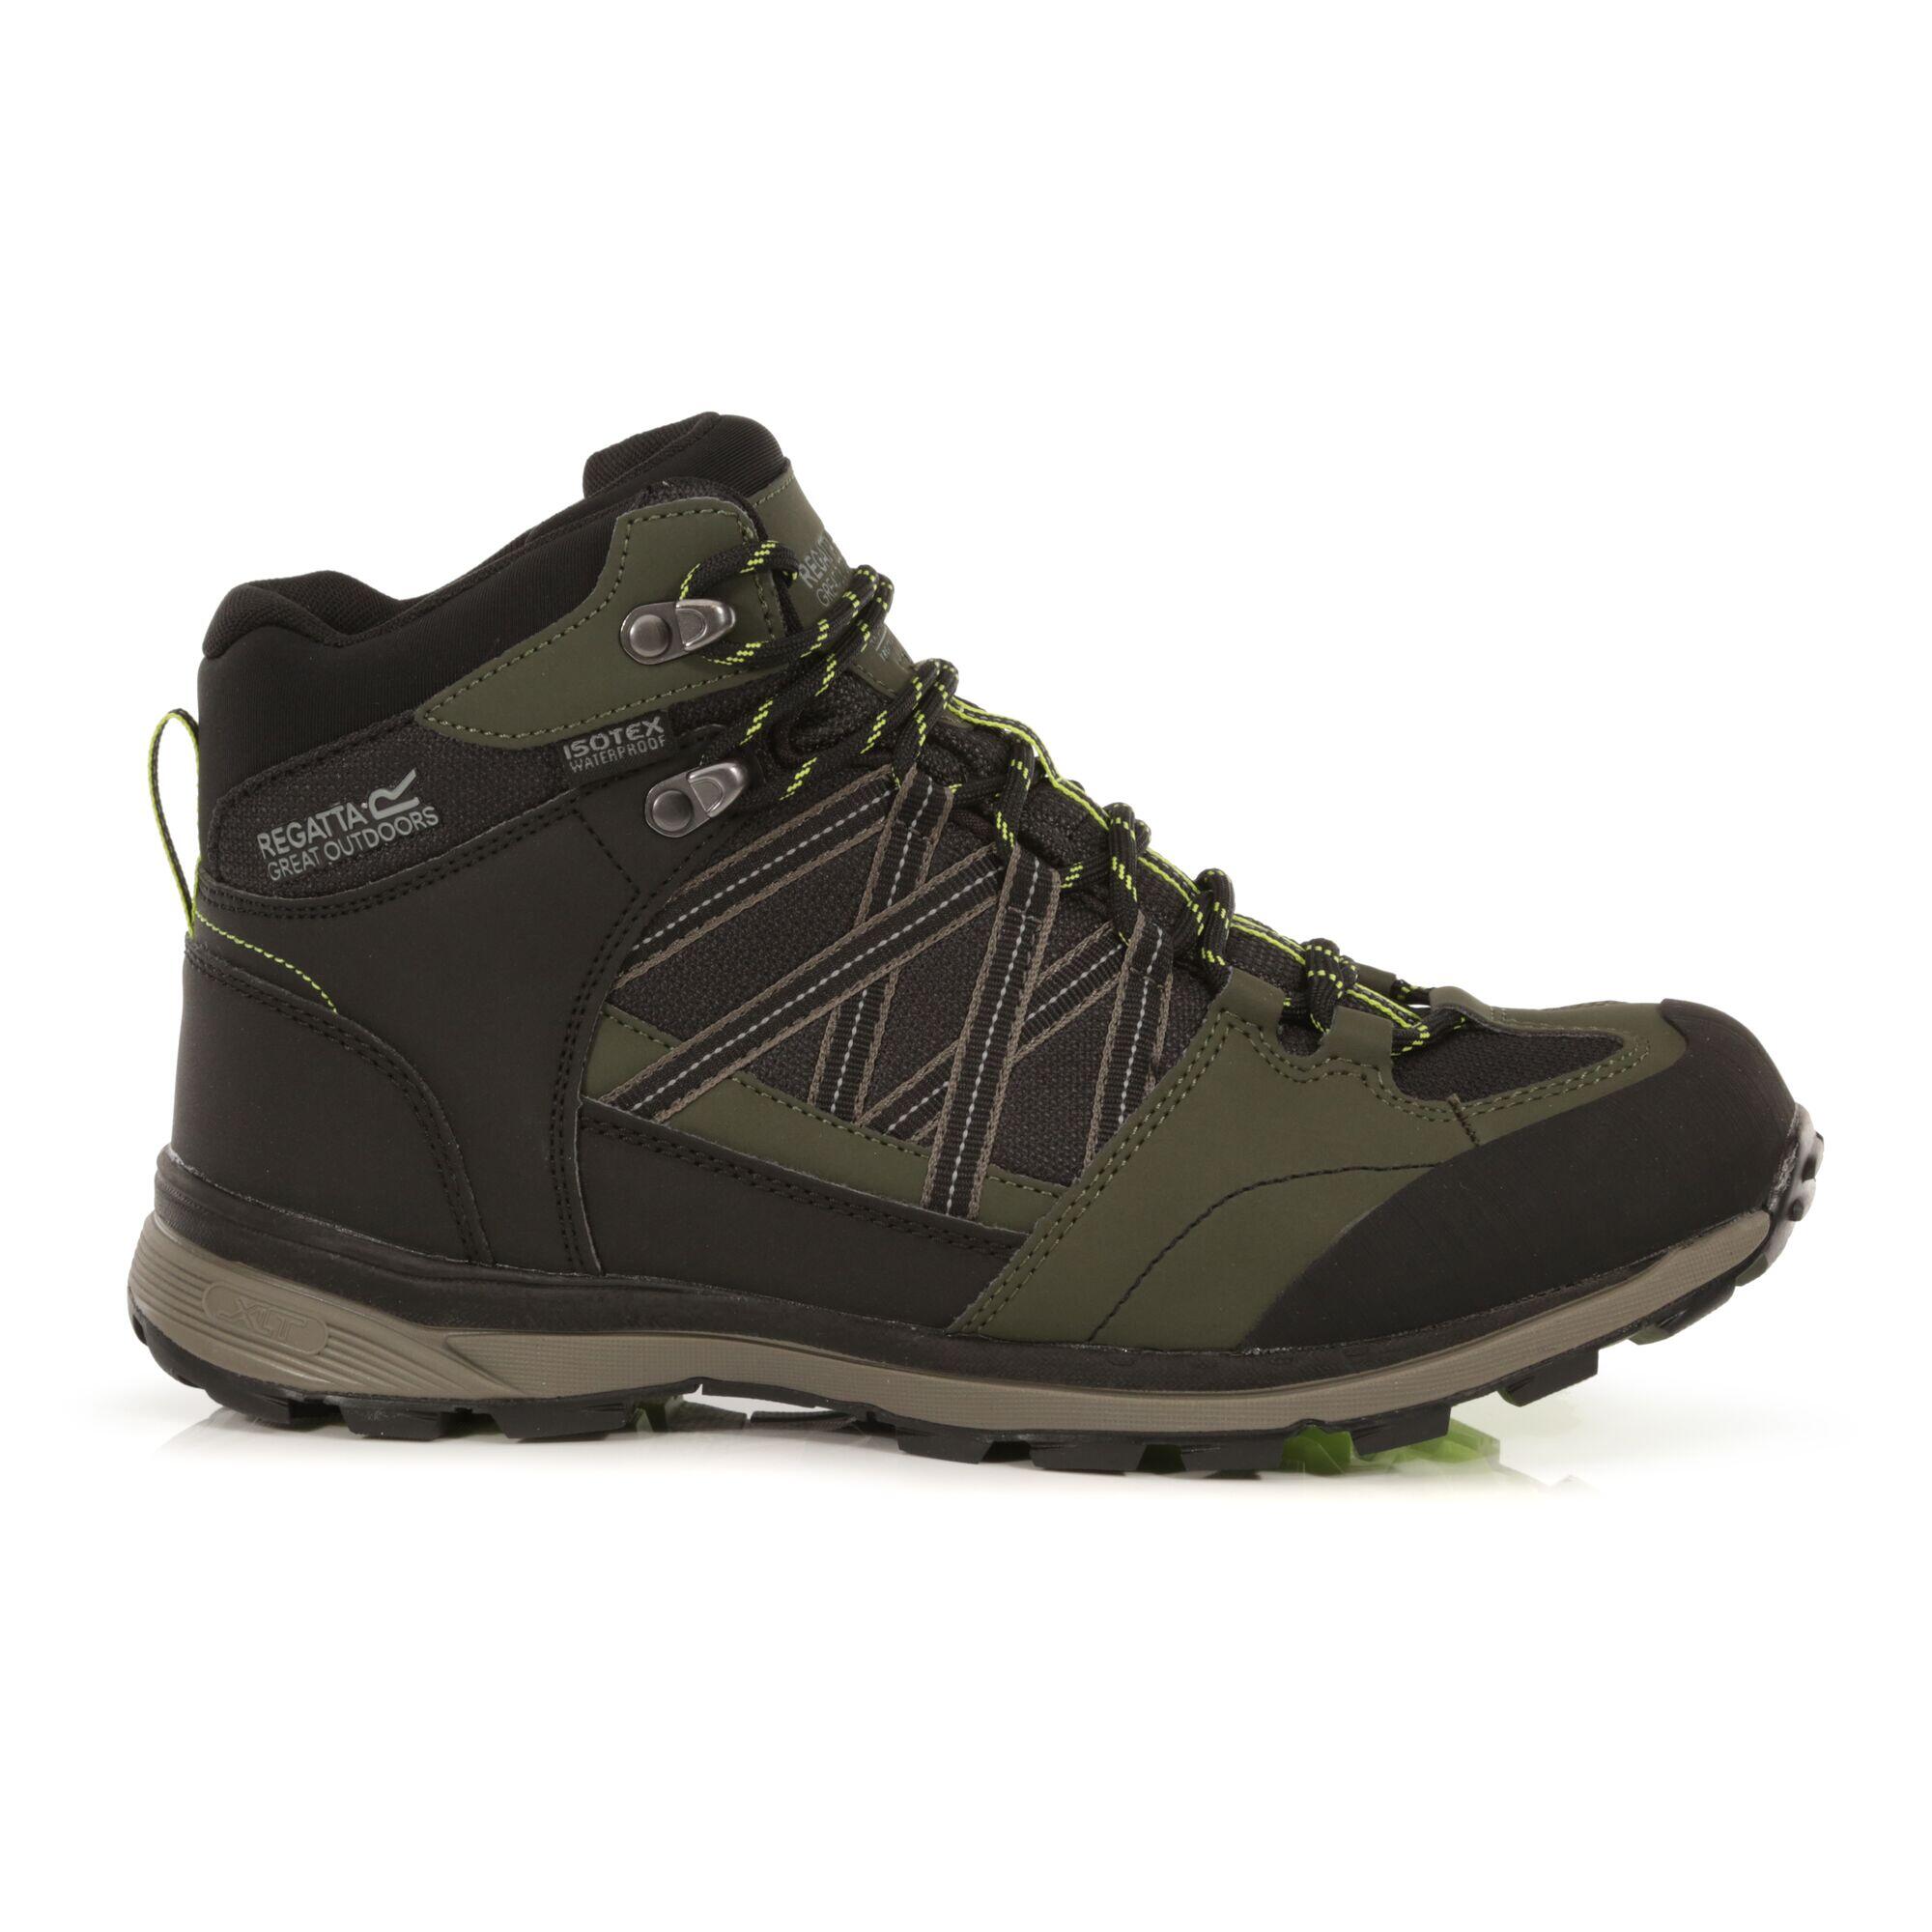 Samaris II Men's Hiking Boots - Dark Khaki/Light Green 2/6